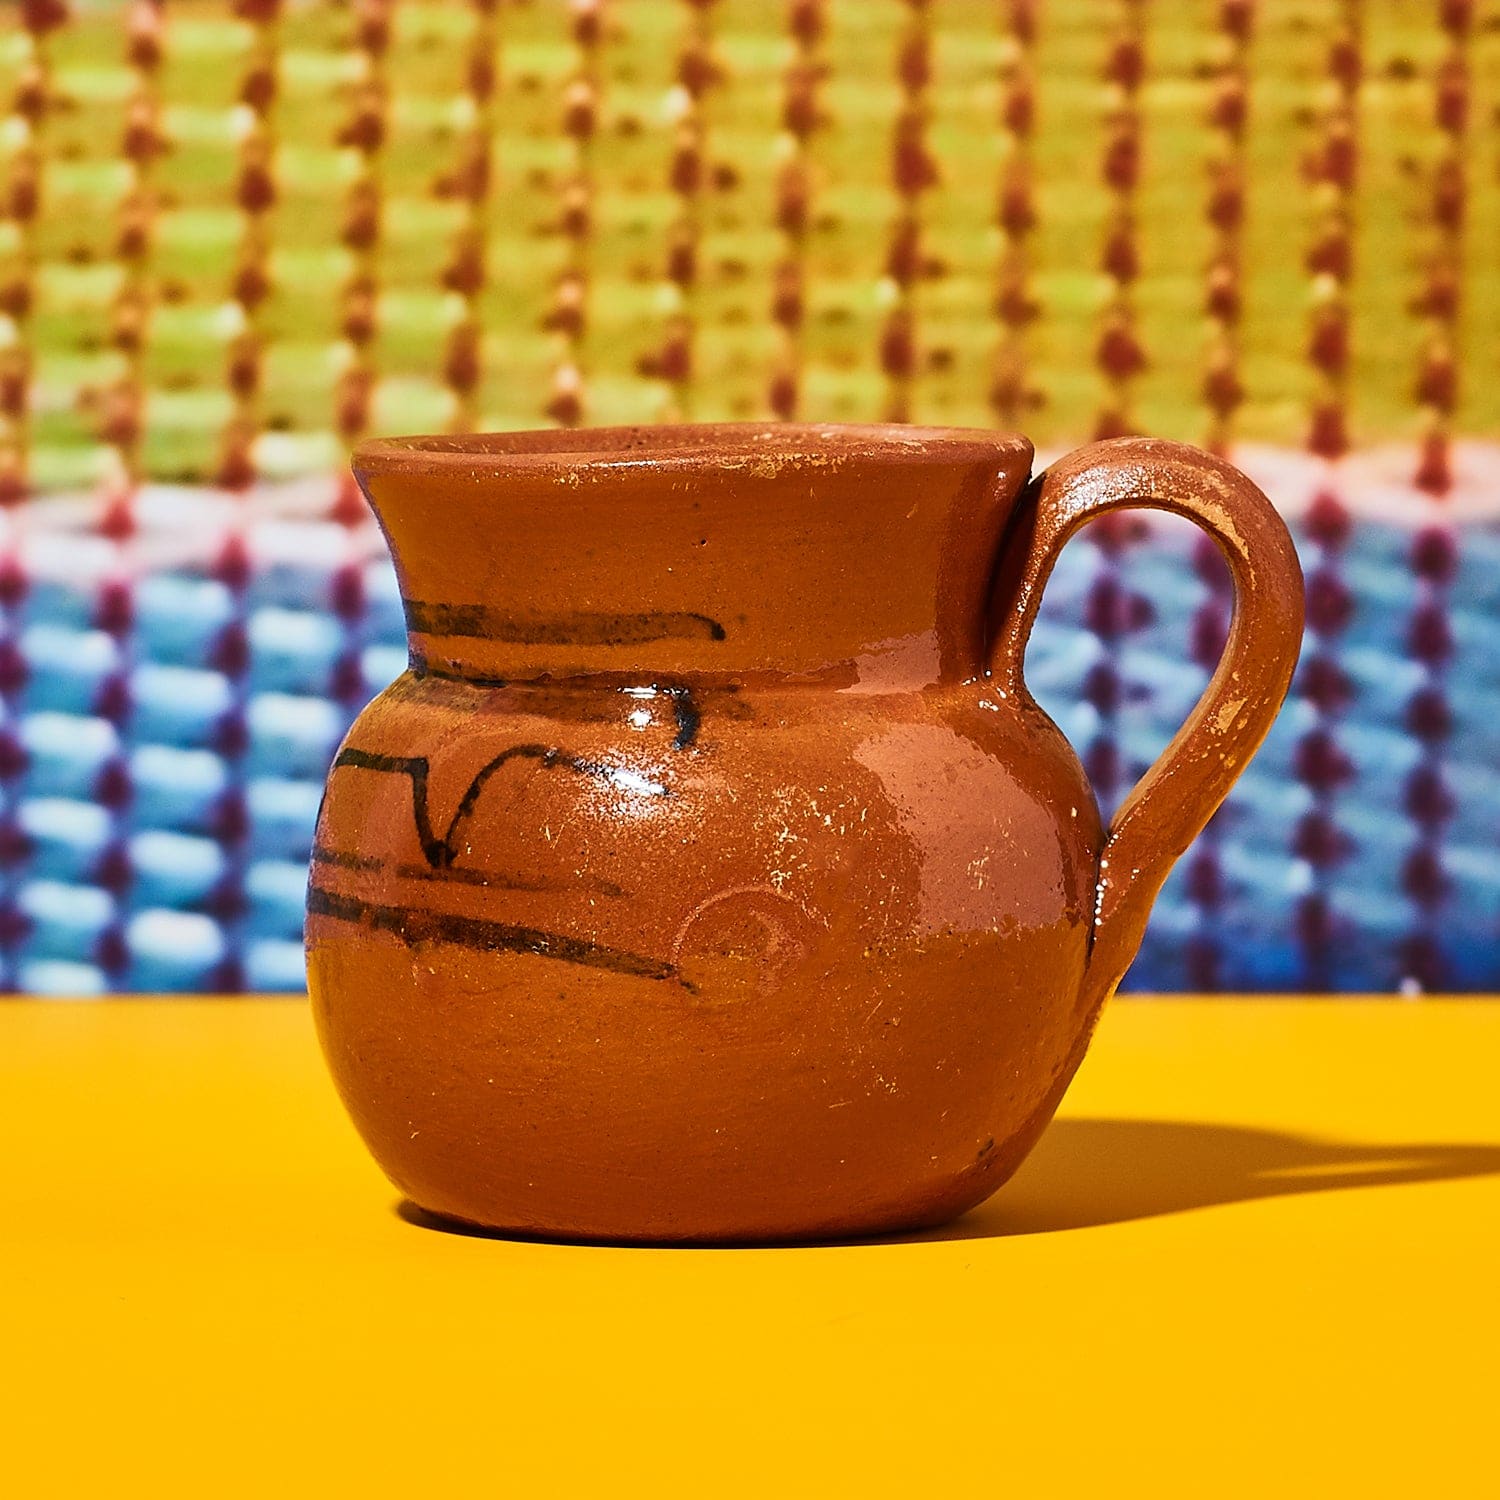 Jarrito Mexican Mug Cdmx22 - Ceramic - Clay - Decor Accent -